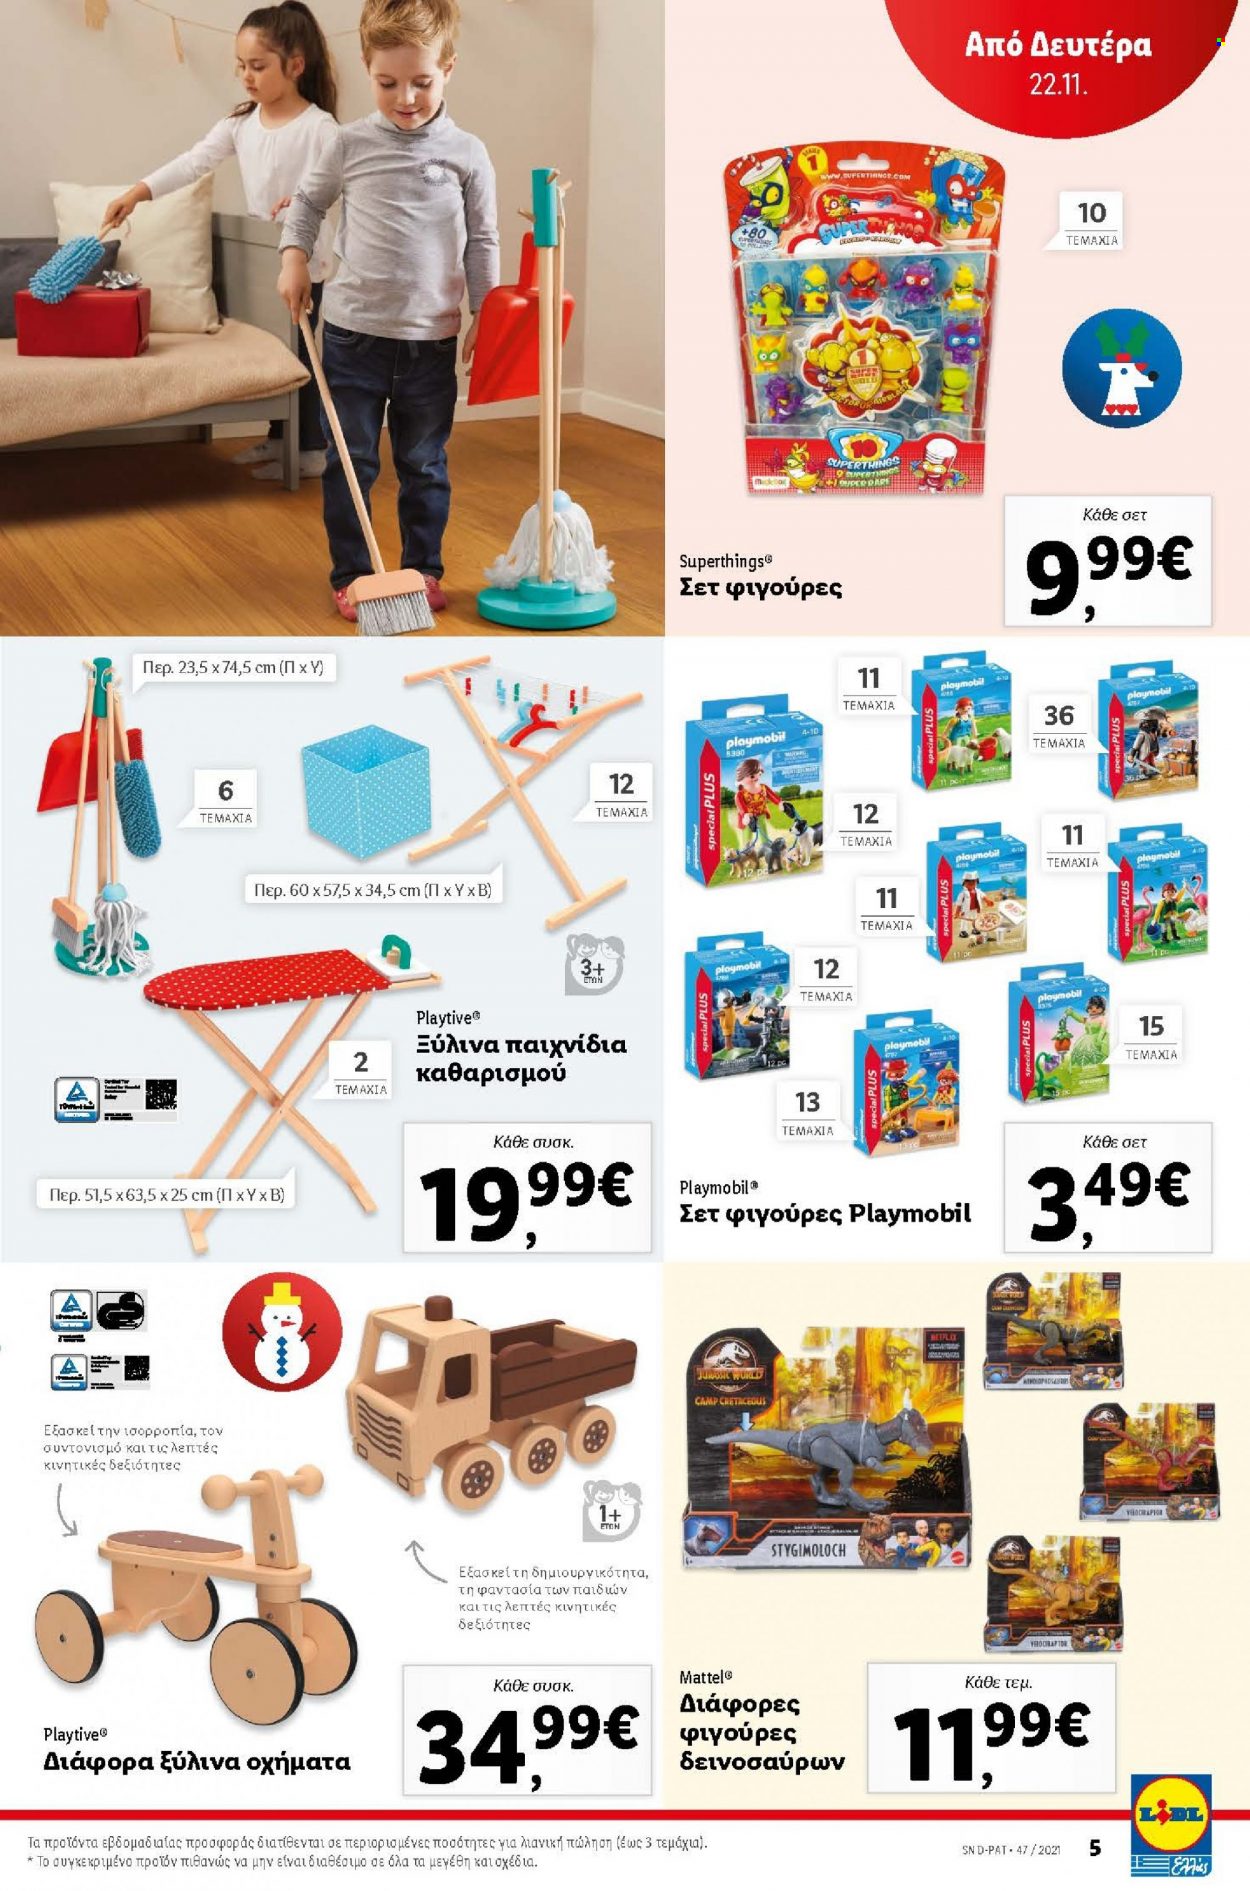 thumbnail - Φυλλάδια Lidl - 22.11.2021 - 27.11.2021 - Εκπτωτικά προϊόντα - Playmobil, ξυλινα παιχνιδια. Σελίδα 5.